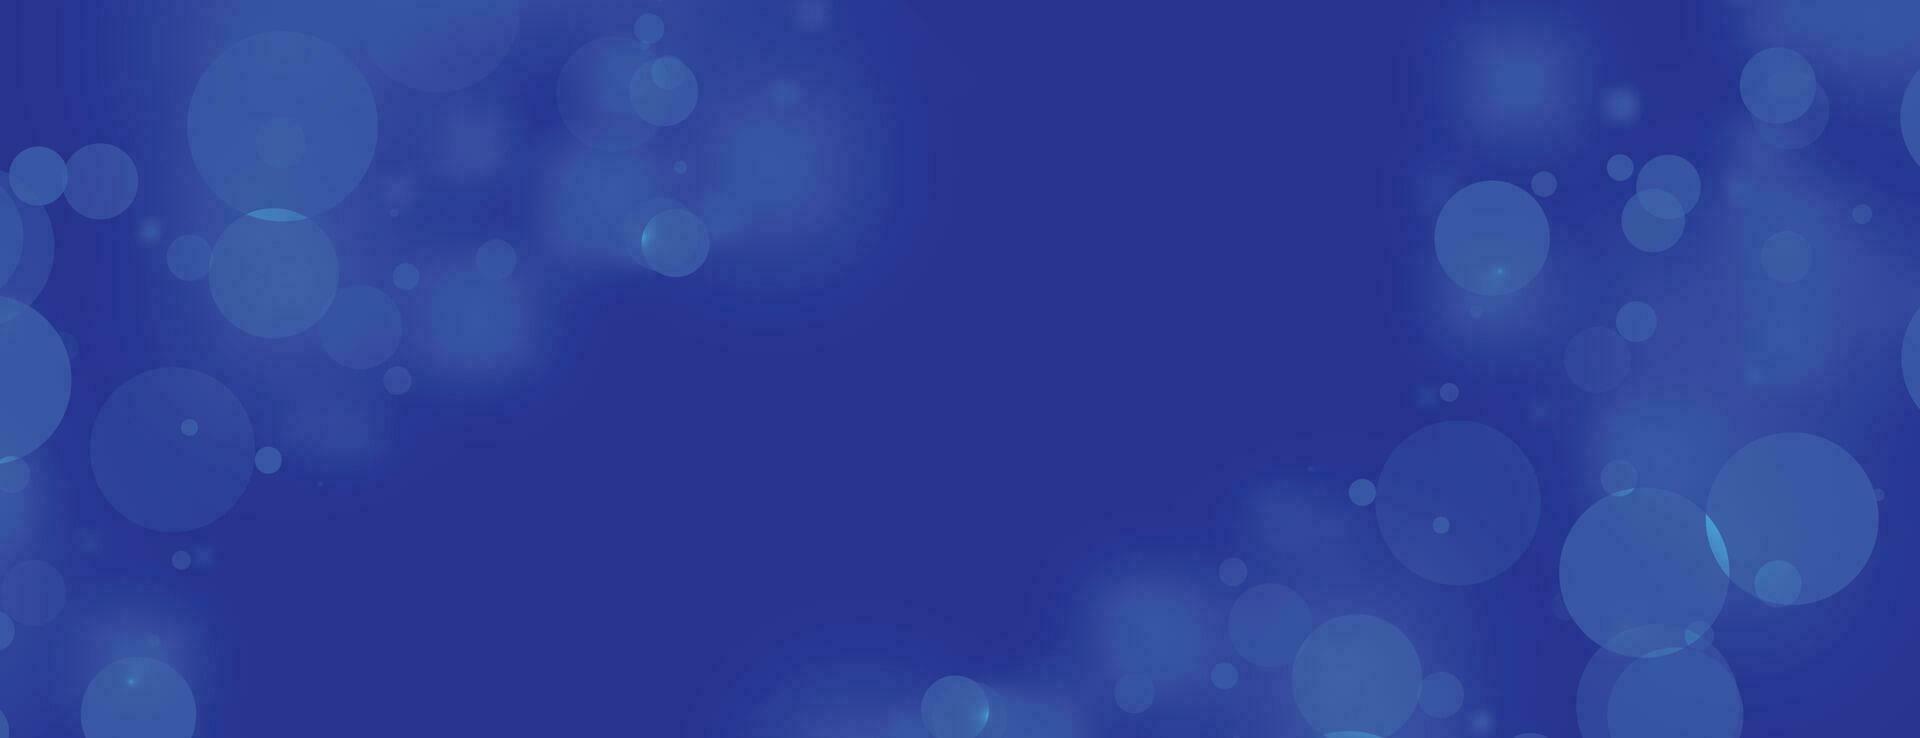 dark blue background with bokeh lights vector